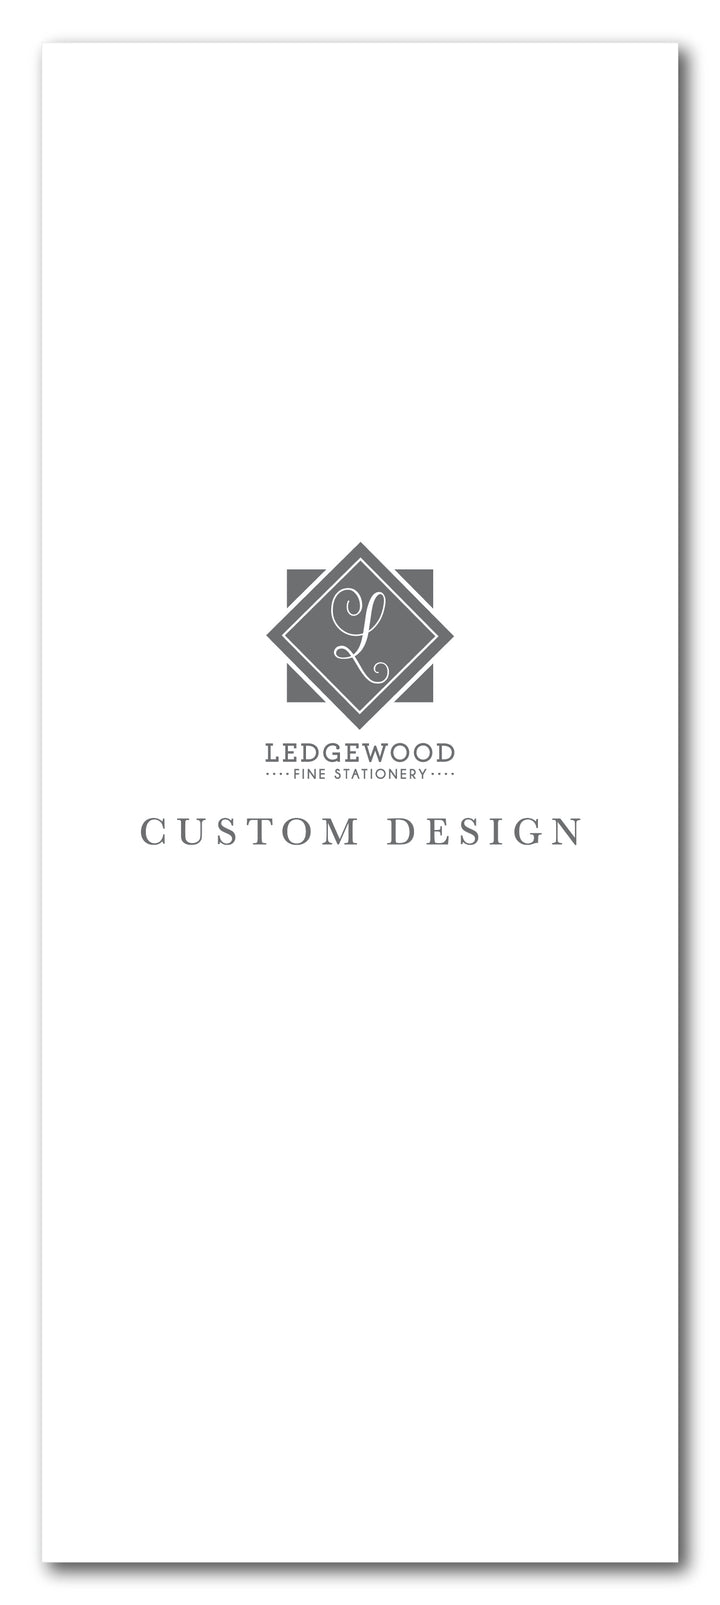 Custom Design Welcome Card